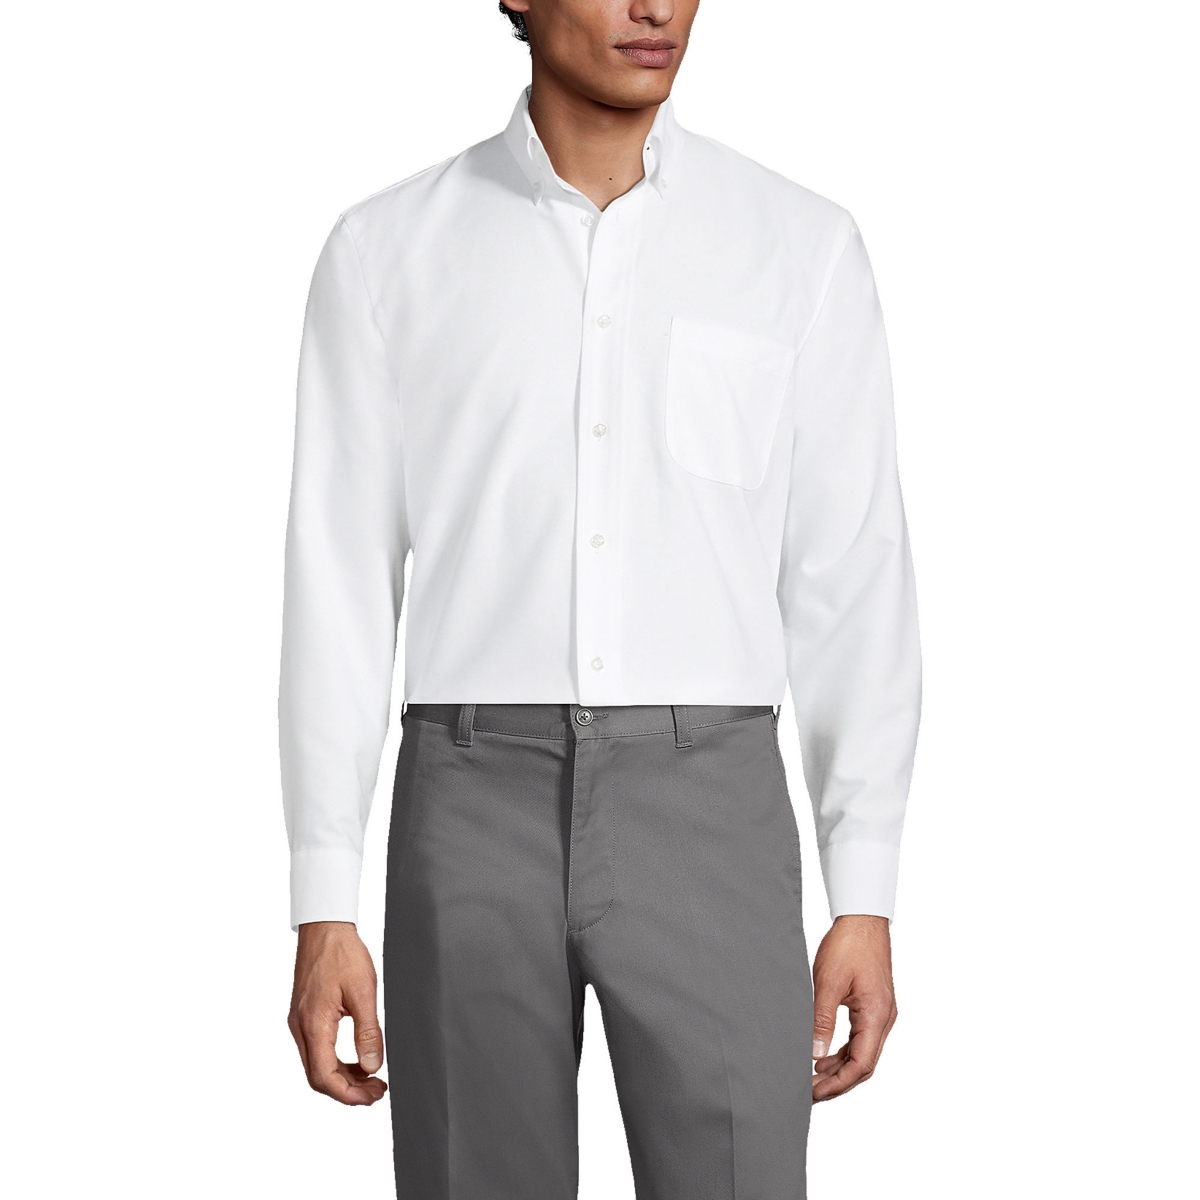 Men's School Uniform Long Sleeve Solid Oxford Dress Shirt - White